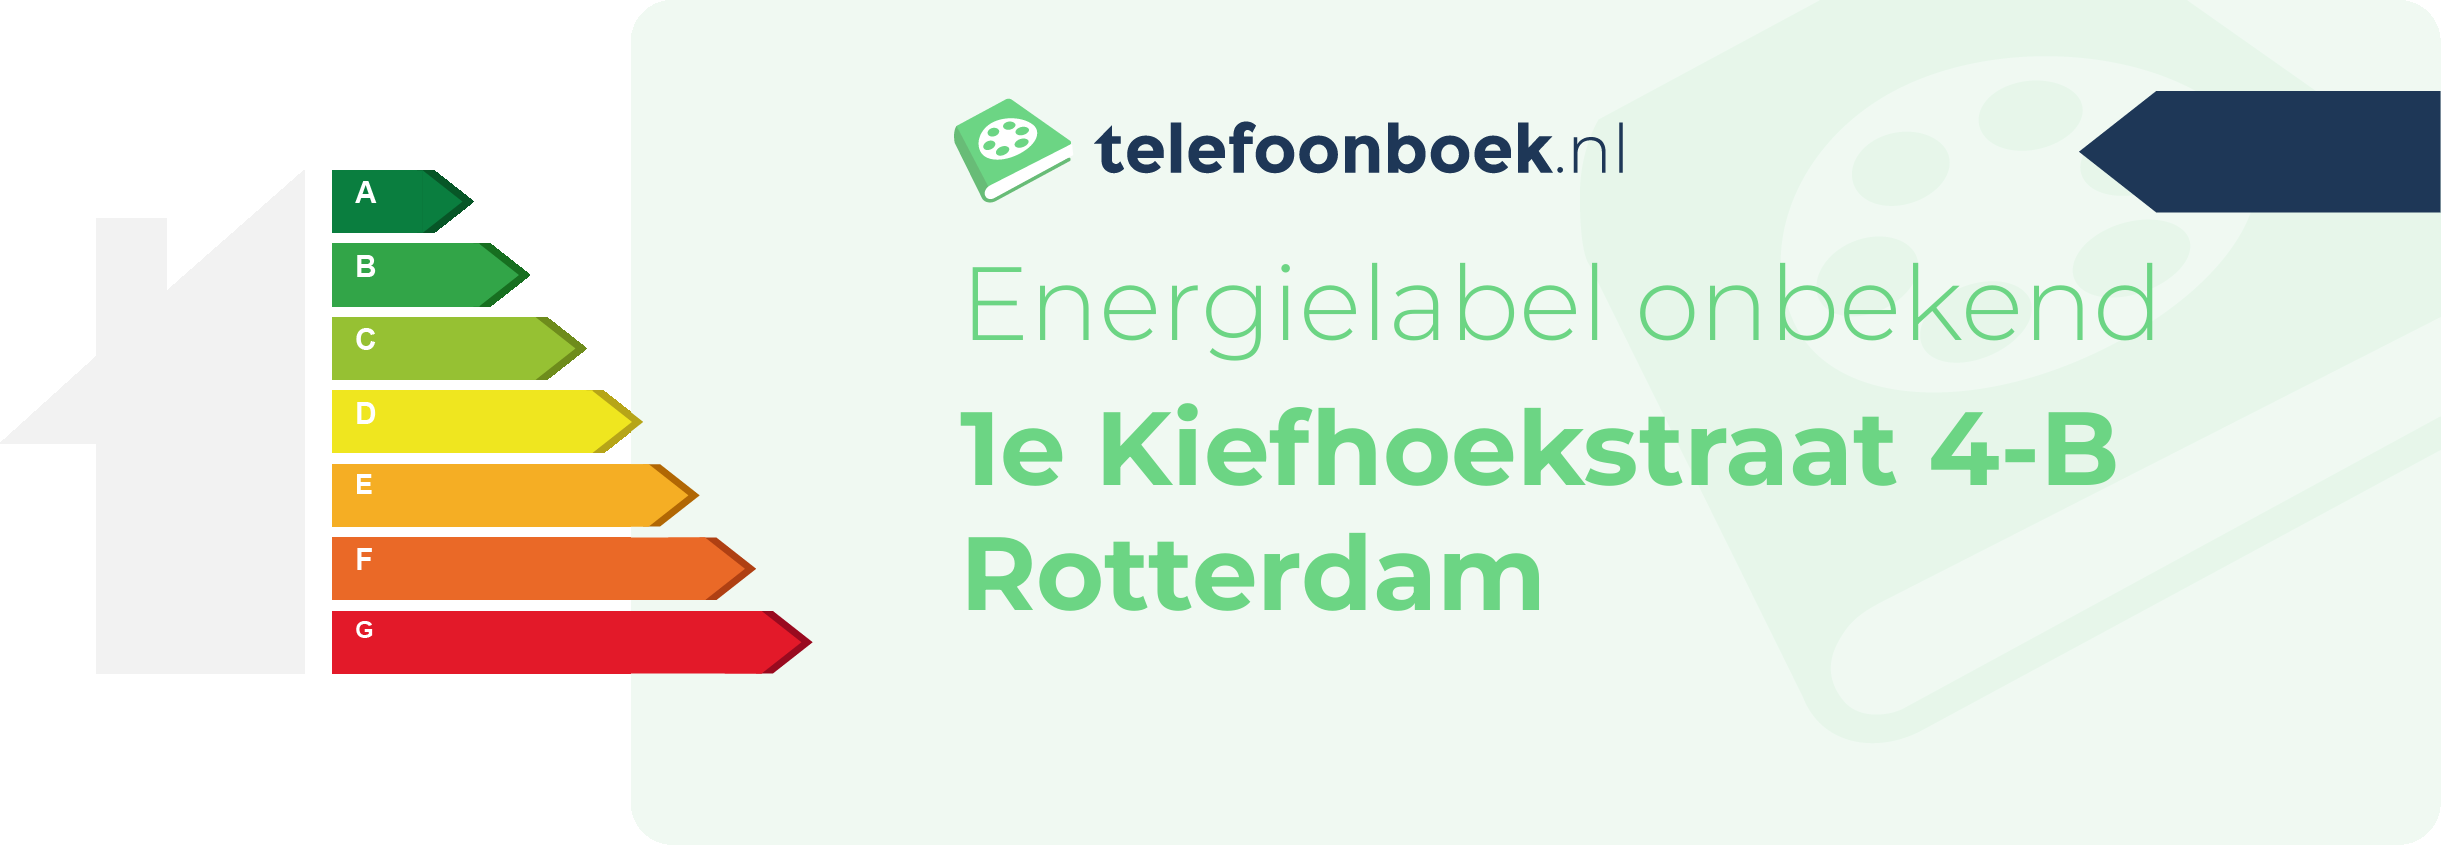 Energielabel 1e Kiefhoekstraat 4-B Rotterdam